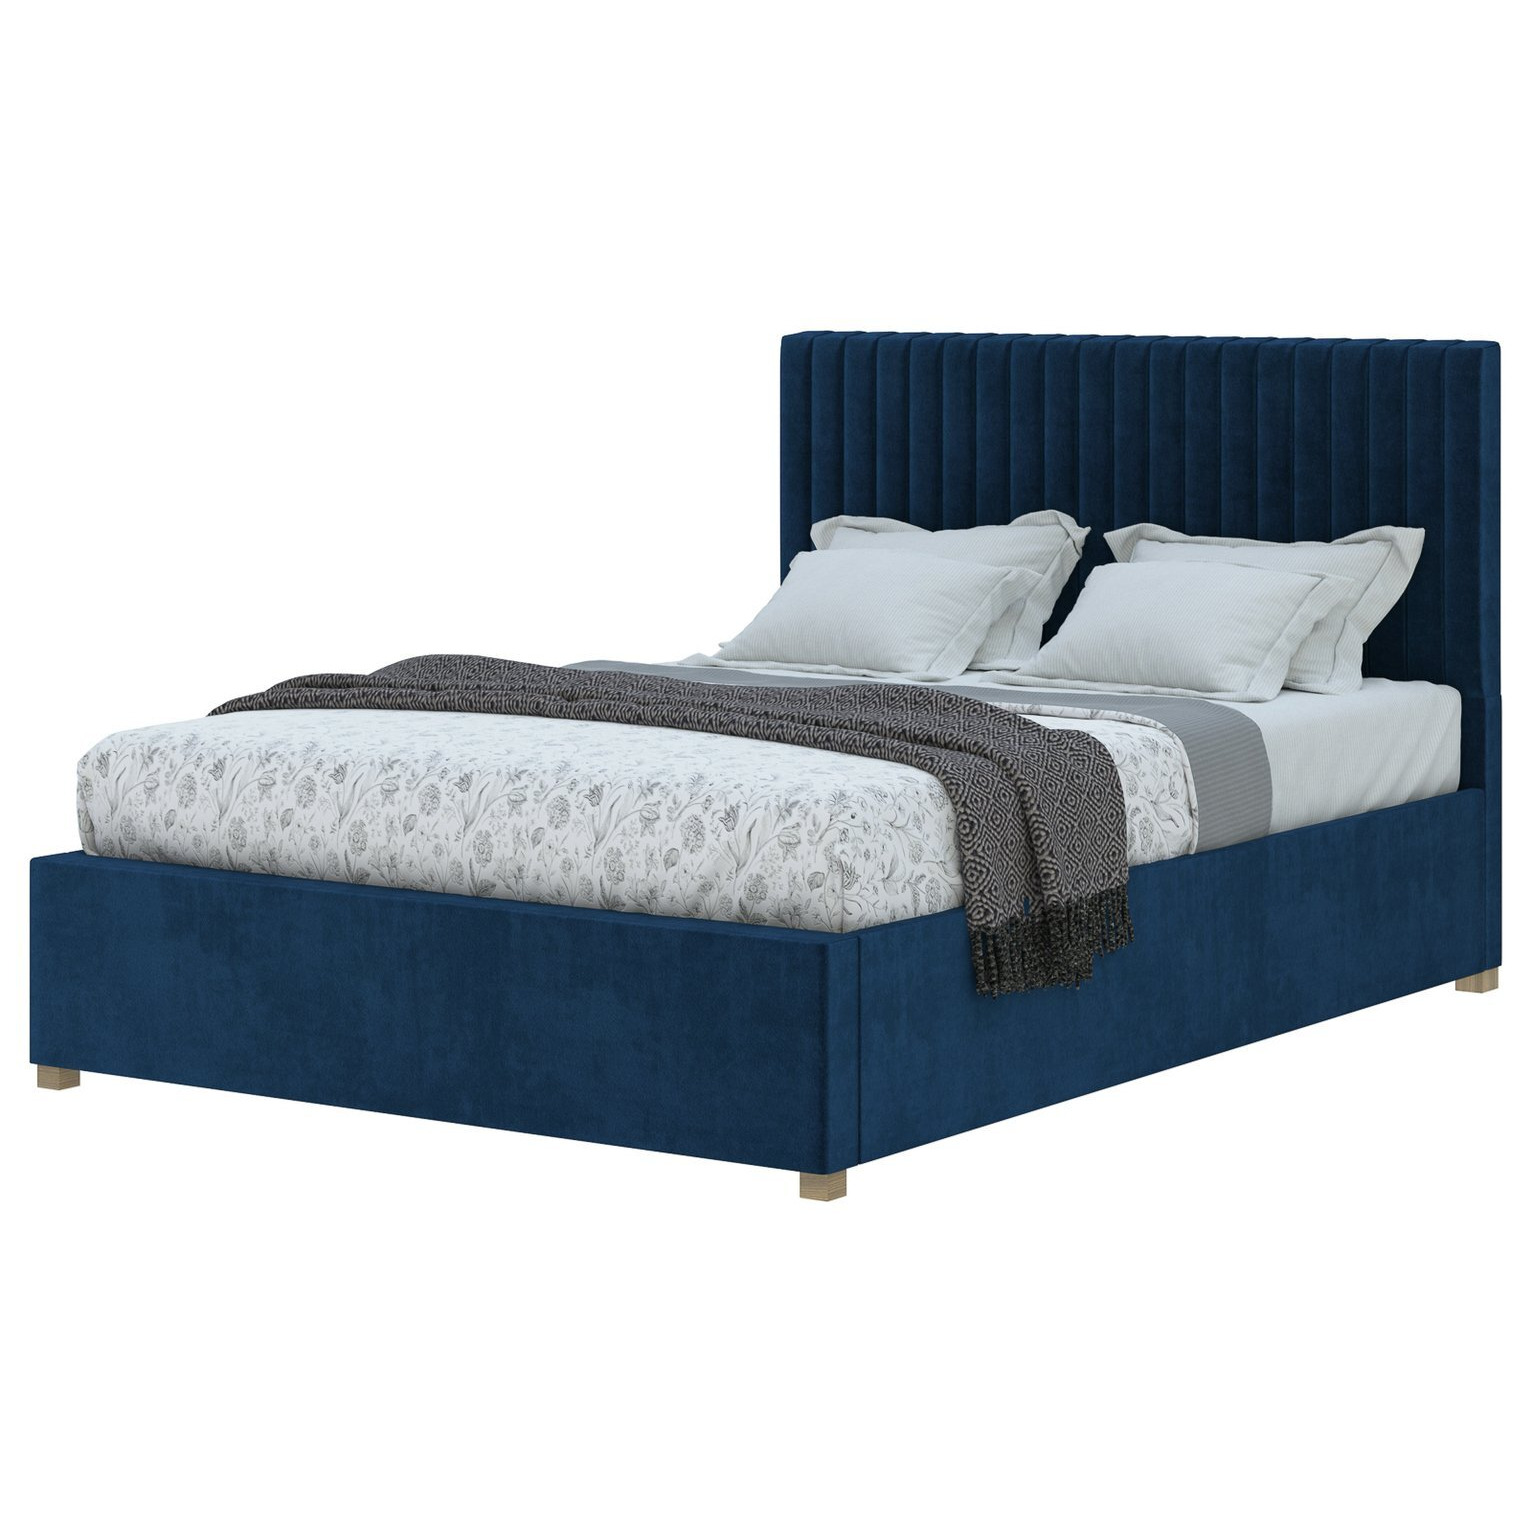 Aspire Double Velvet Adjustable Bed with Mattress - Navy - image 1